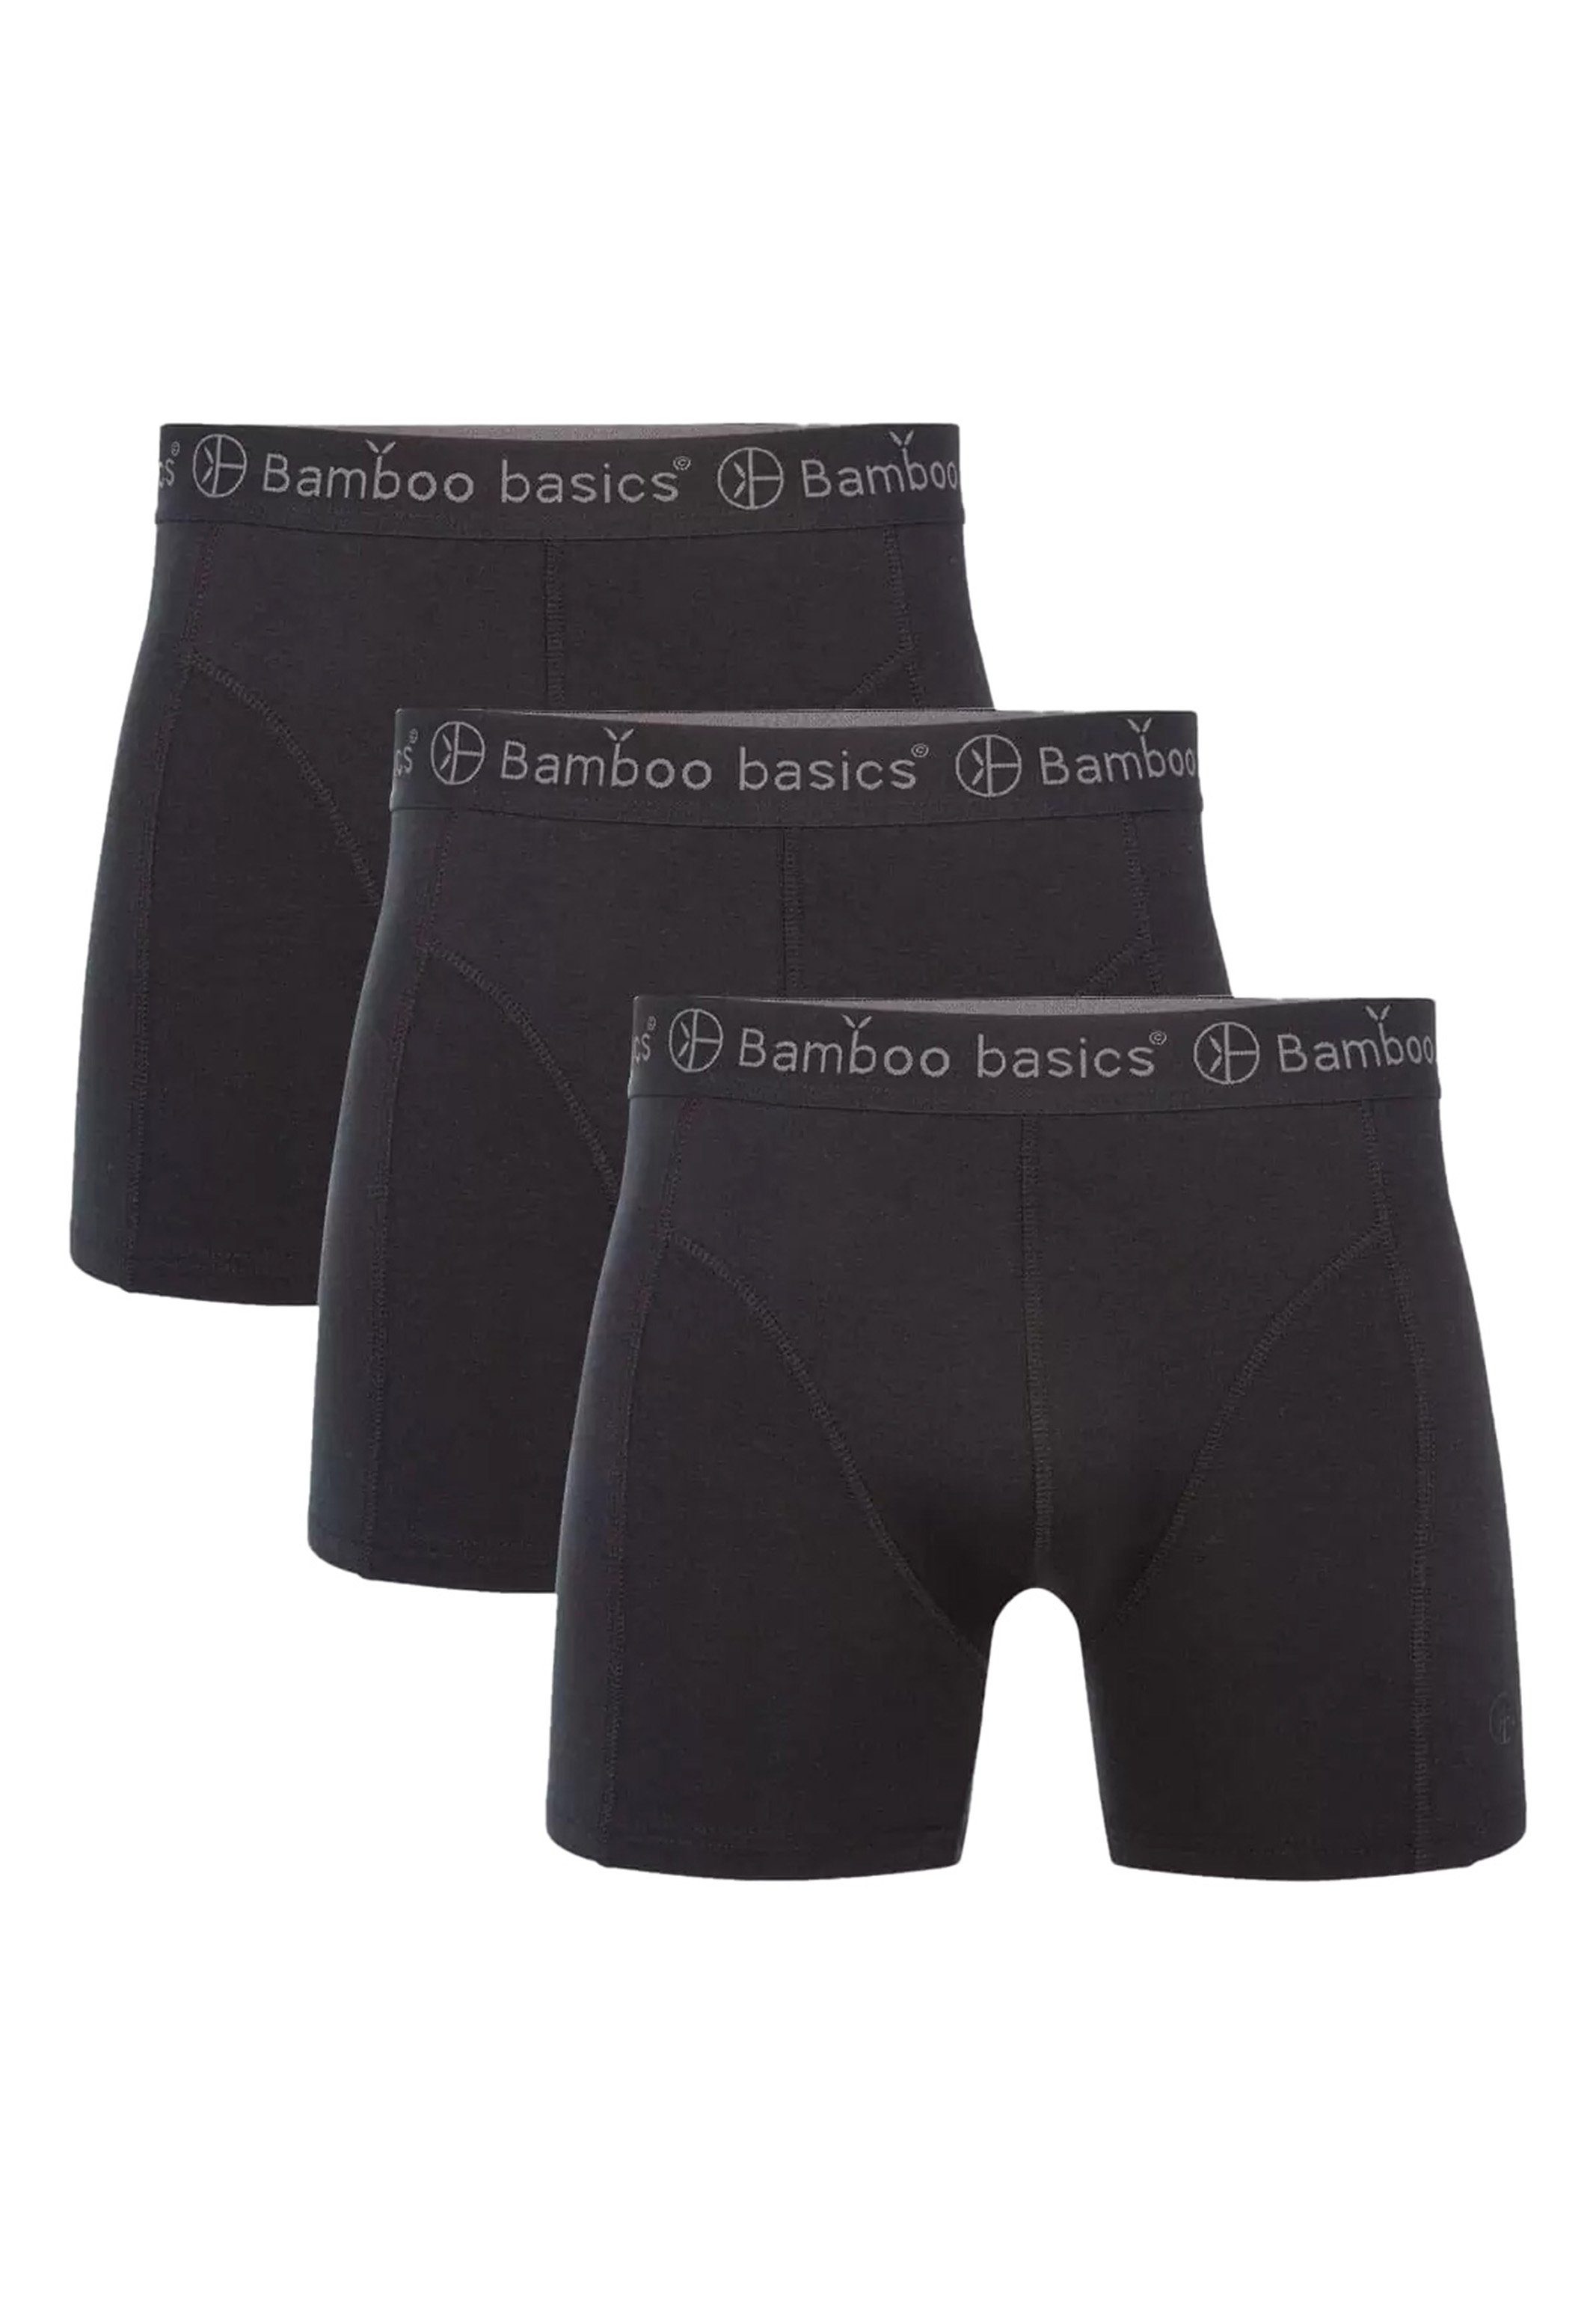 Bamboo basics Retro Boxer 3er Pack Rico (Spar-Set, 3-St) Retro Short / Pant - Ohne Eingriff - Weiches Material mit Viskose